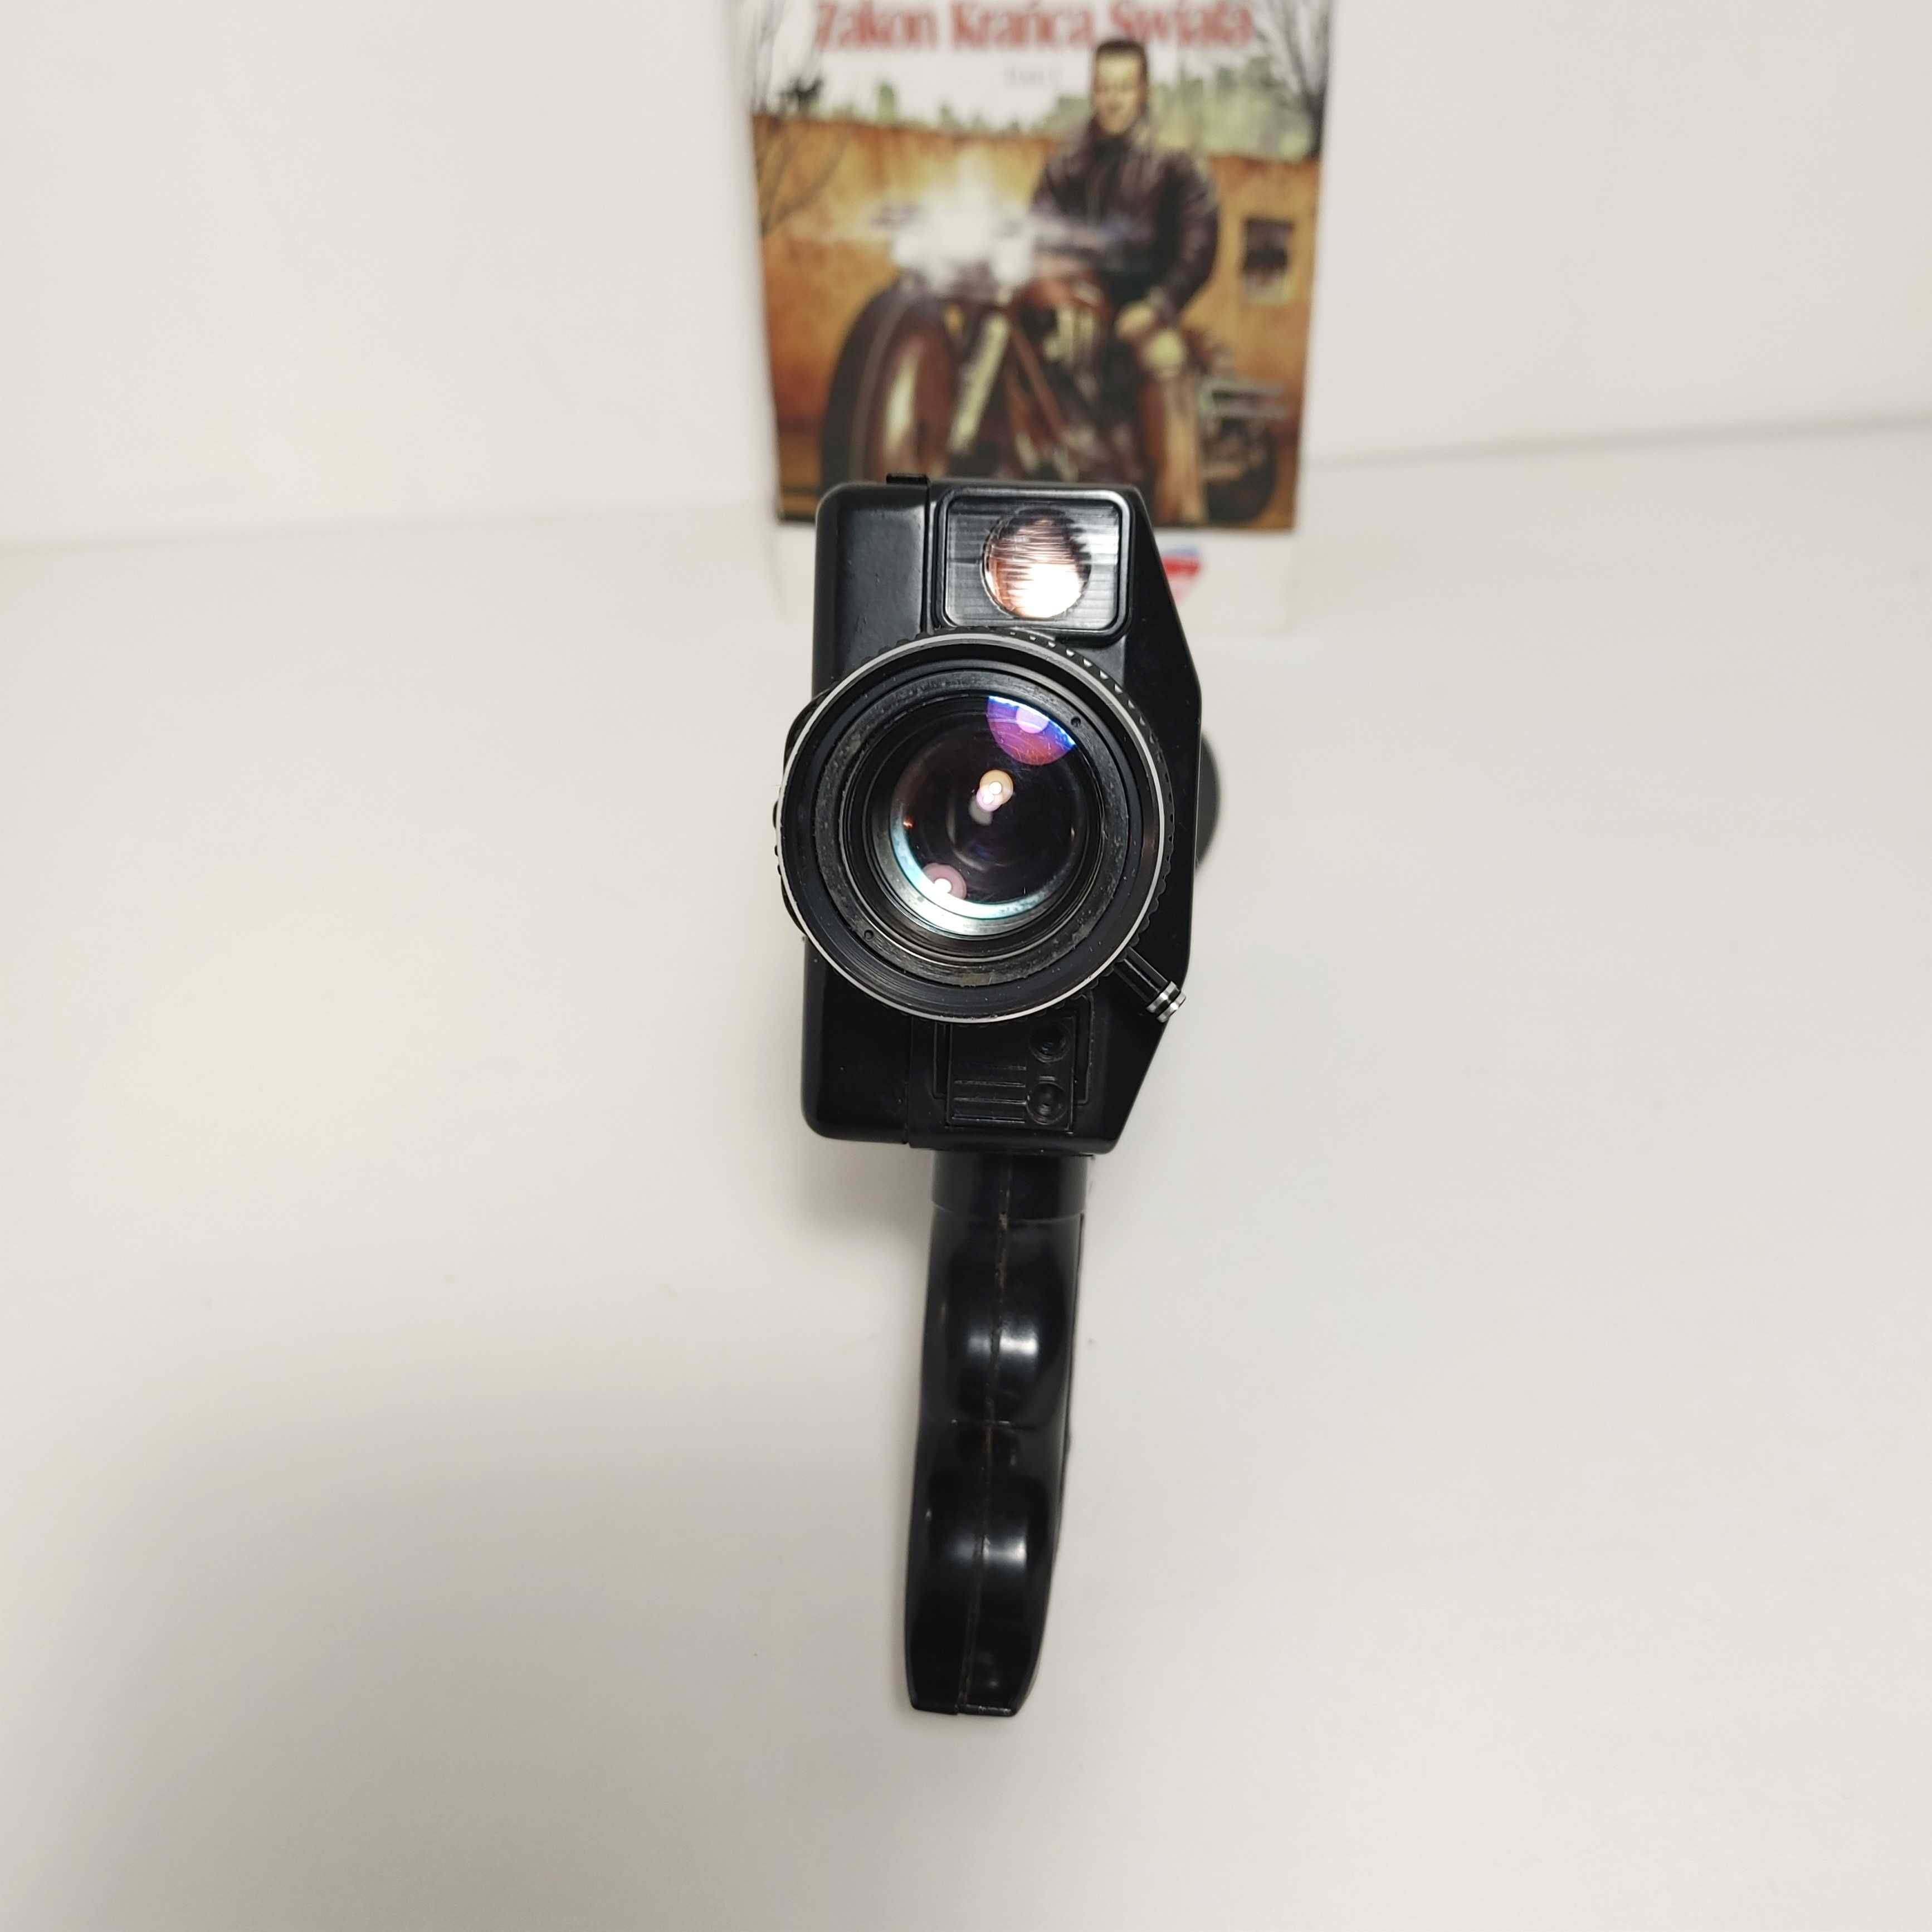 Kamera filmowa Super 8 mm EUMIG mini 3 z lat 70 tych XX wieku